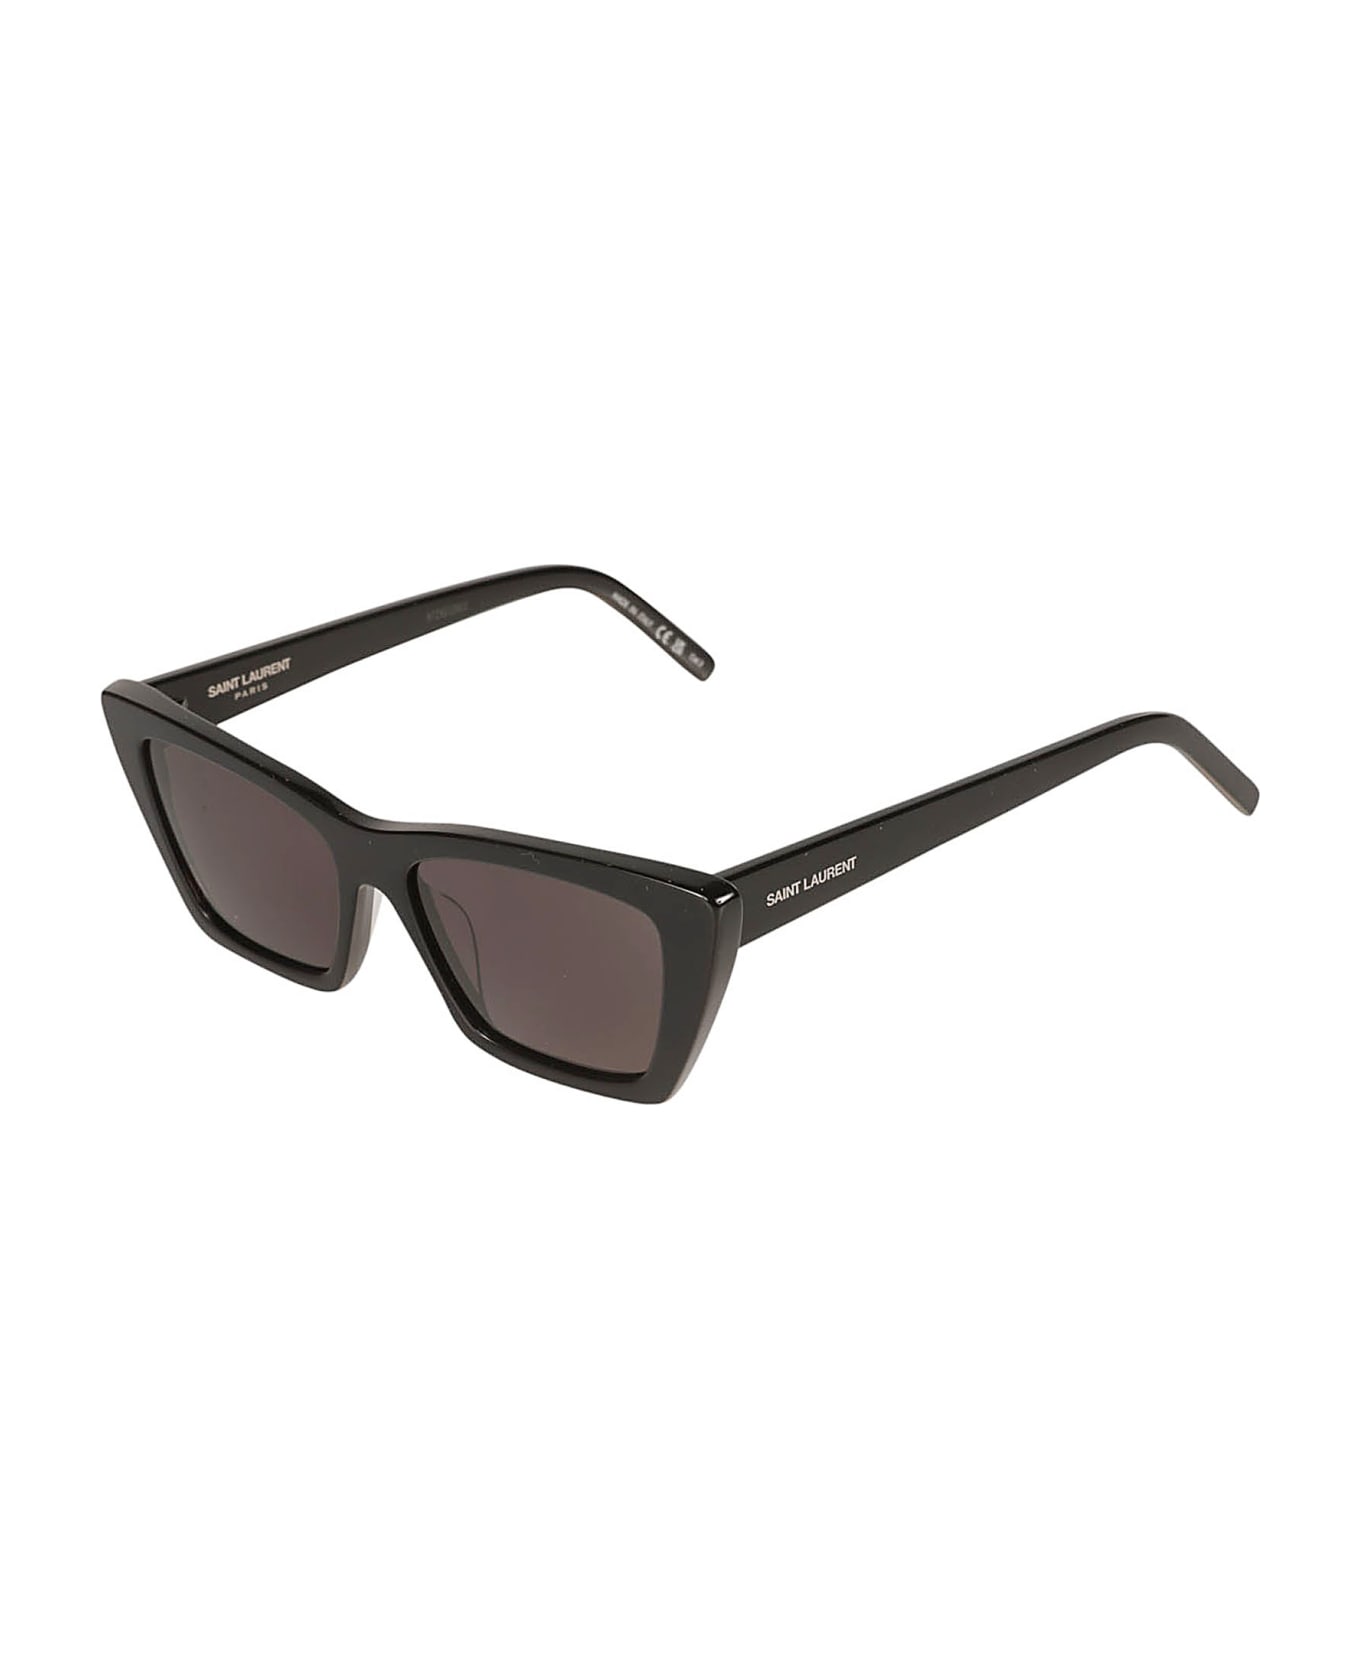 Saint Laurent Eyewear Sl 276 Mica Sunglasses - Black/Grey